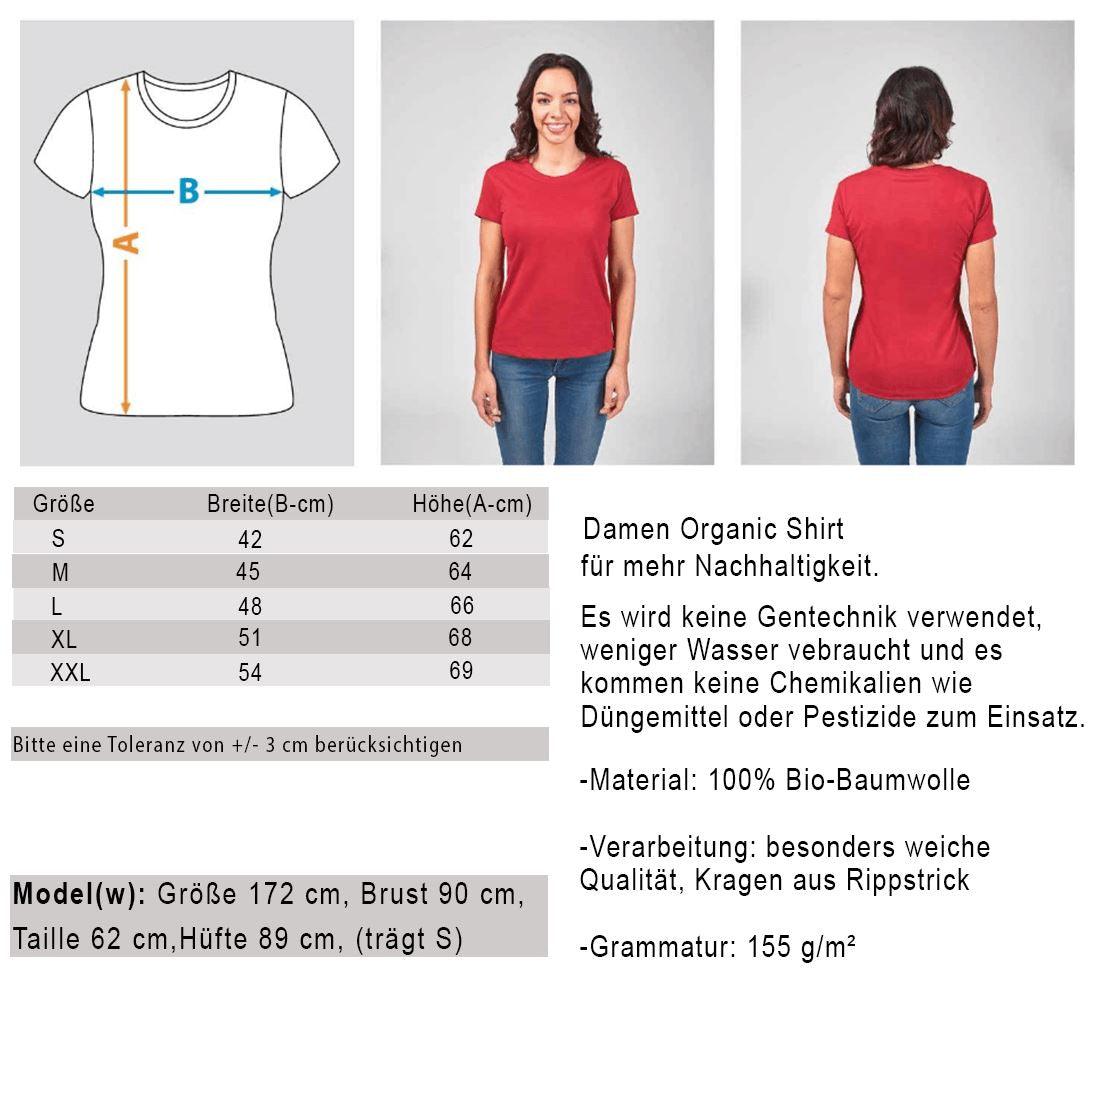 Not your Mom [Chantal Kaufmann] - Damen Organic Shirt - Team Vegan © vegan t shirt